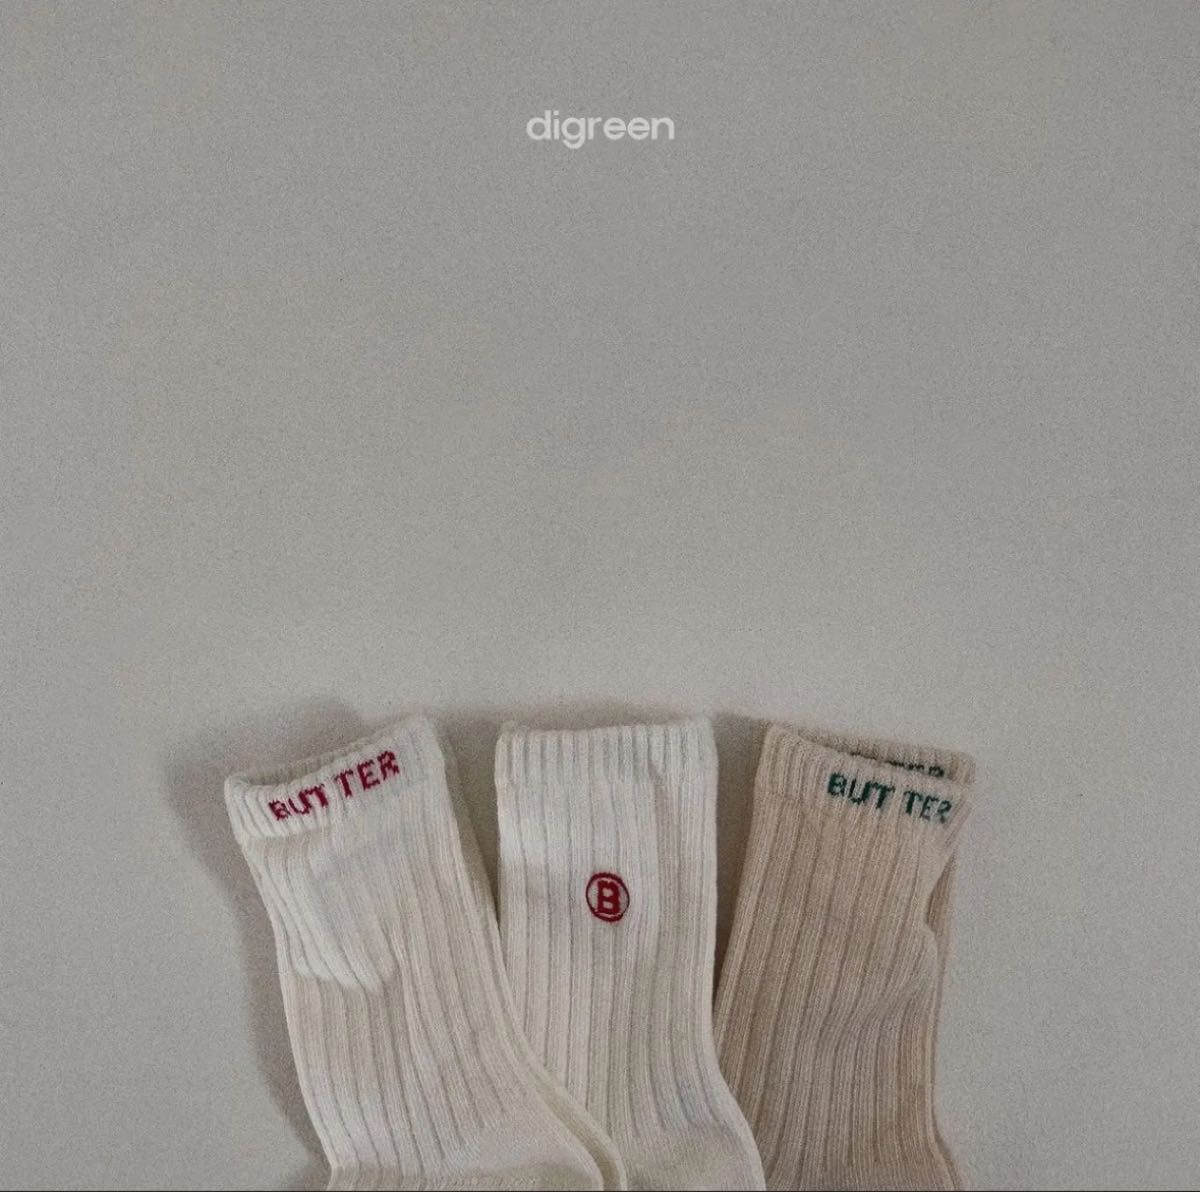 〔M 12.5-14.5cm〕digreen / butter socks